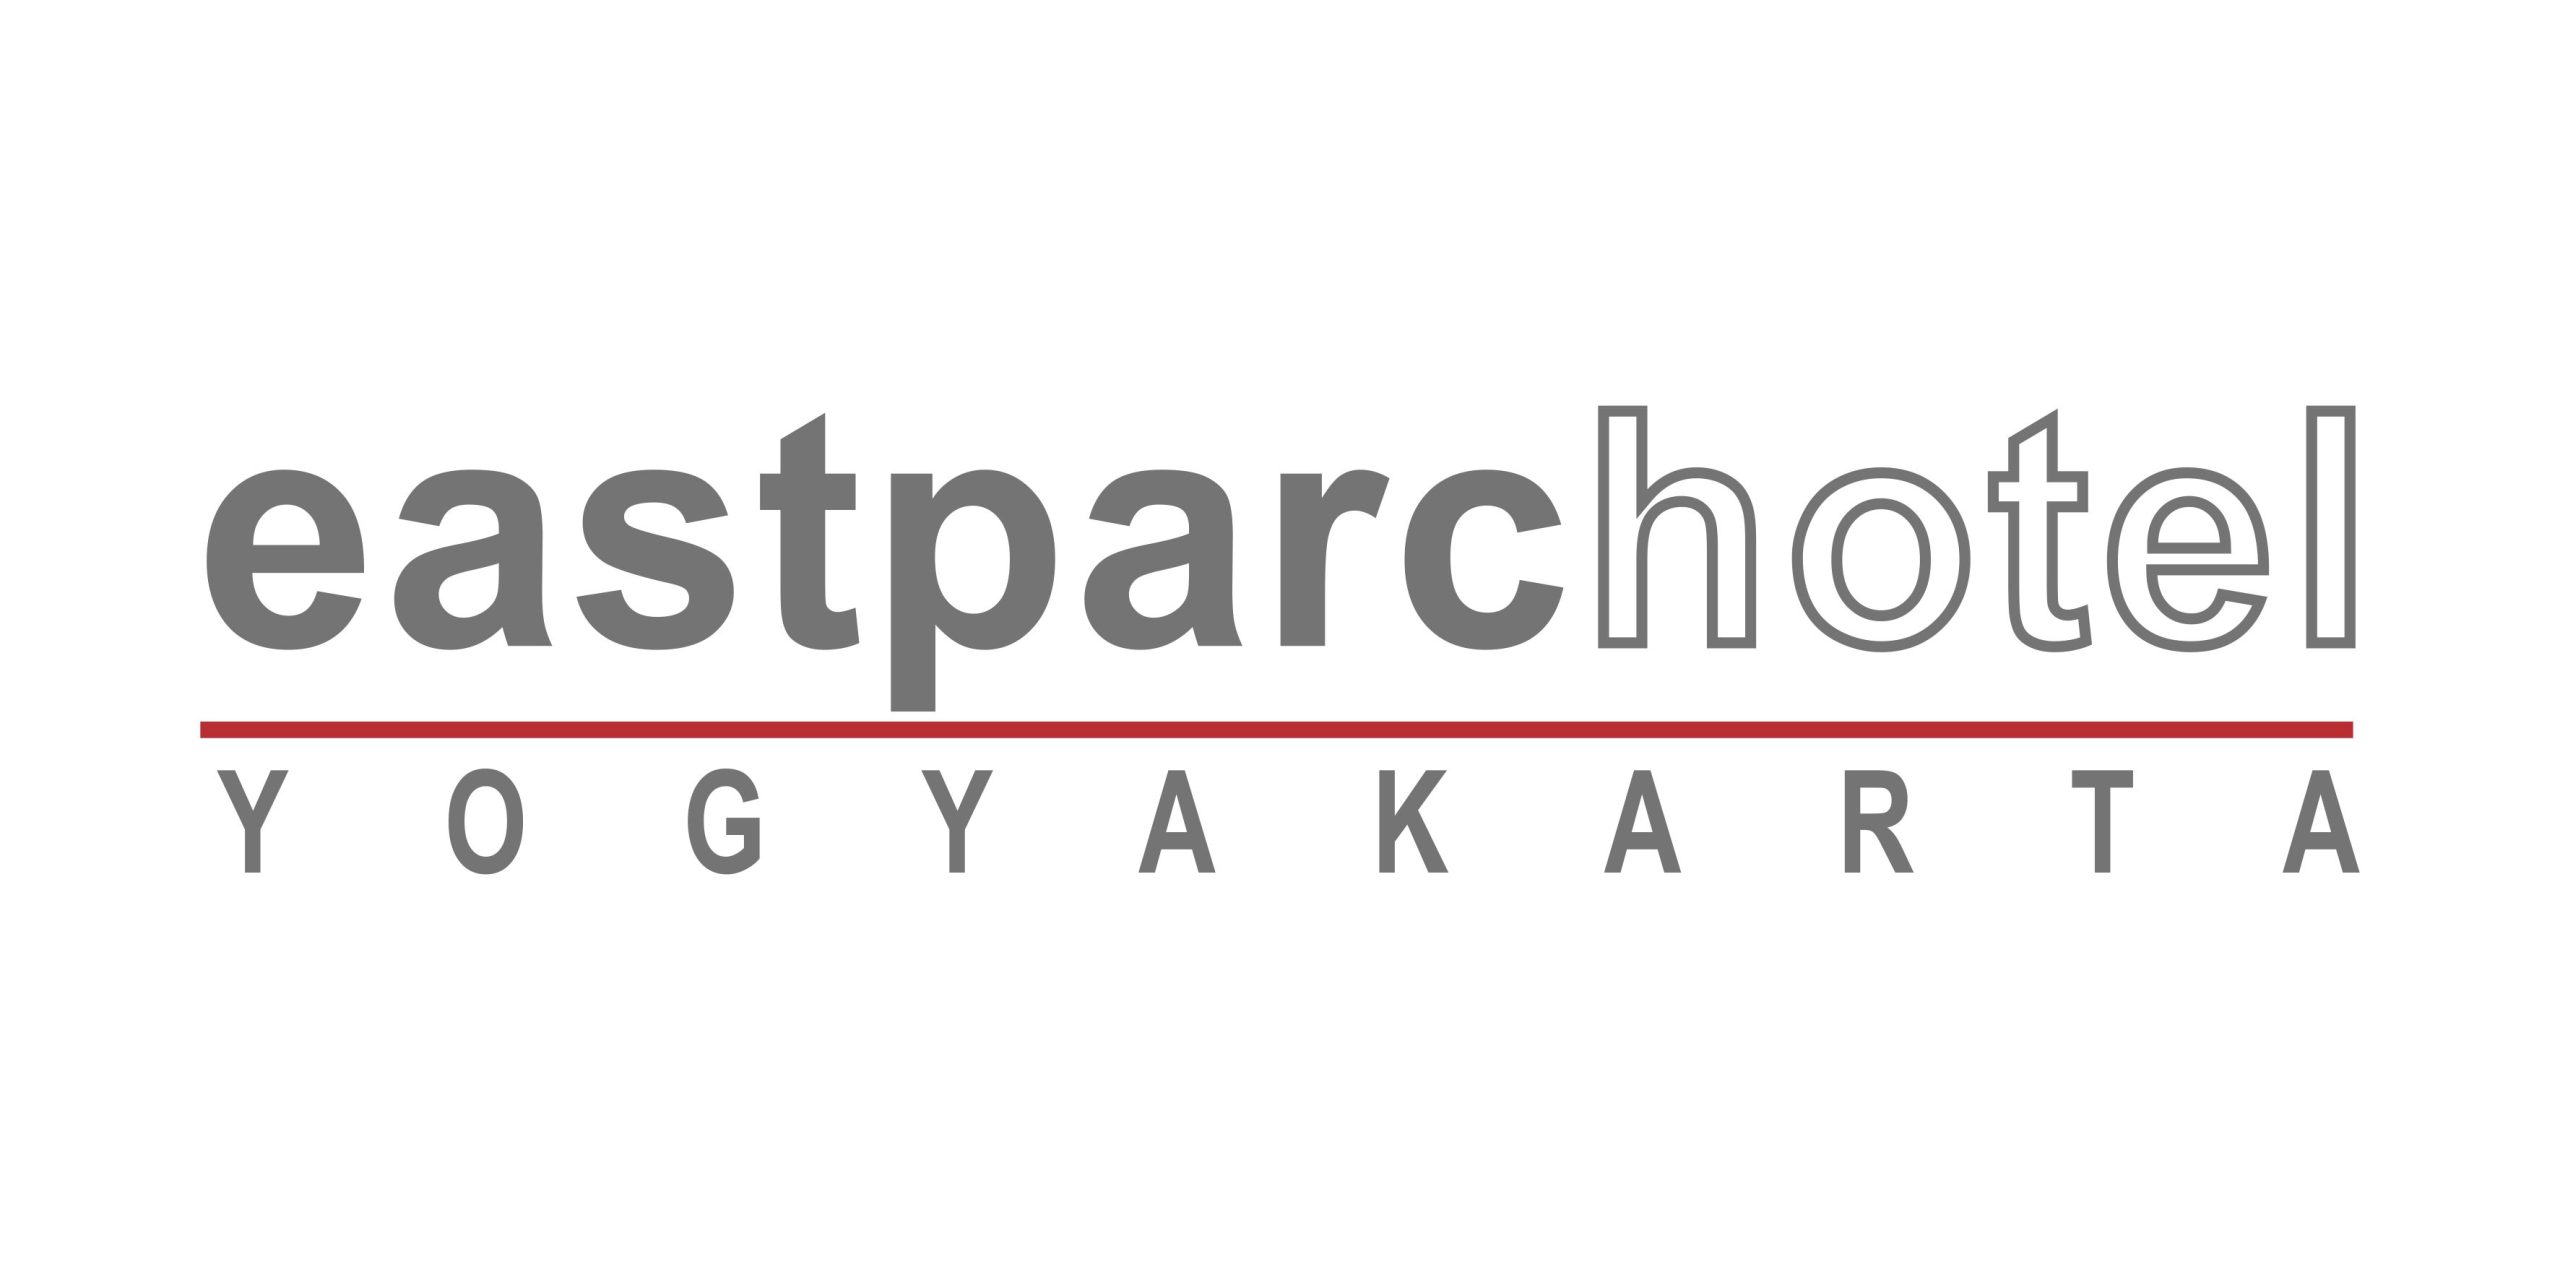 Eastparc Hotel Yogyakarta Logo Vector